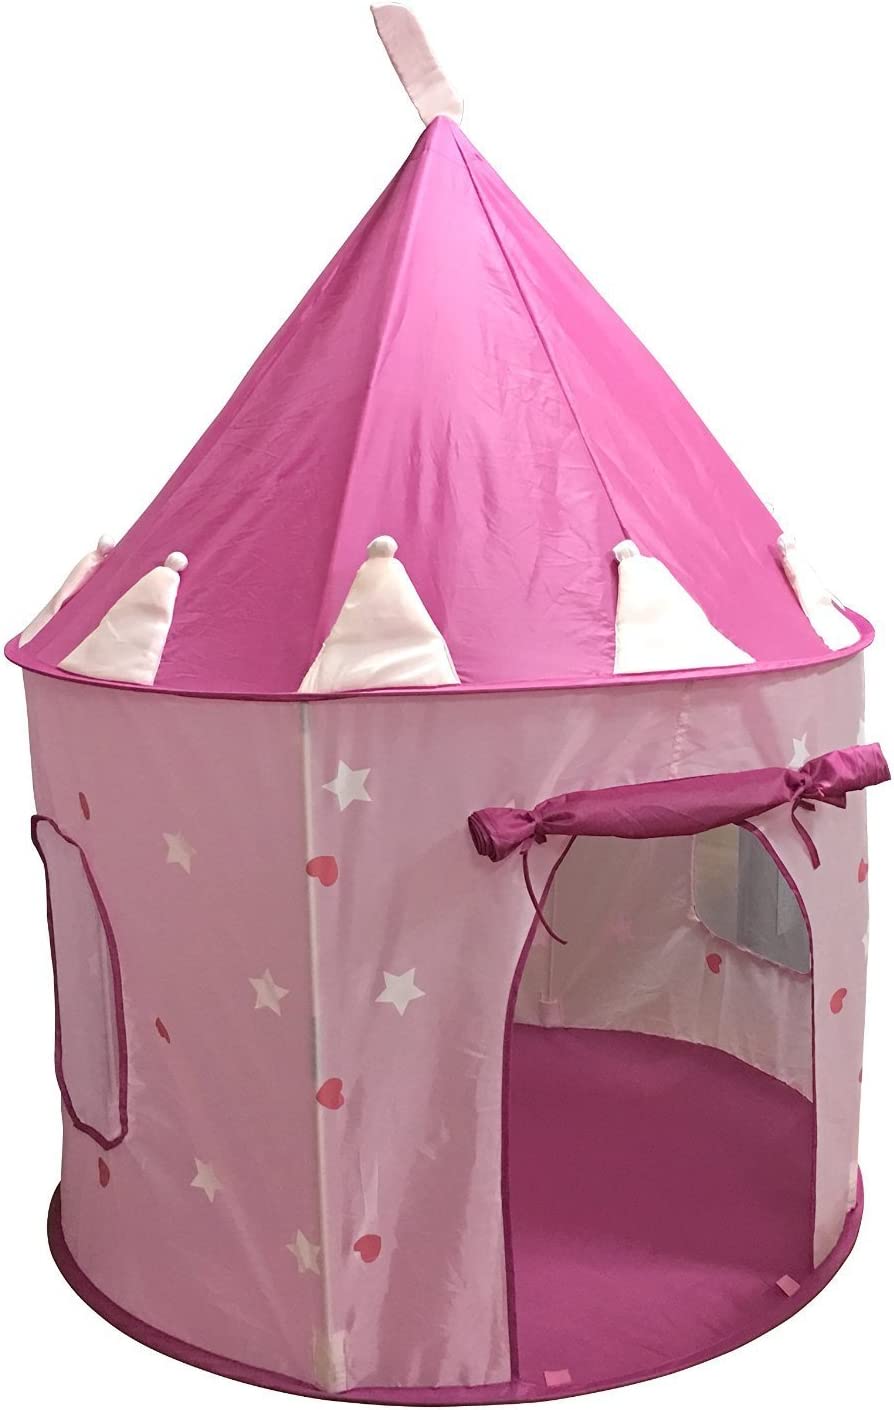 SueSport Girls Princess Castle Play Tent